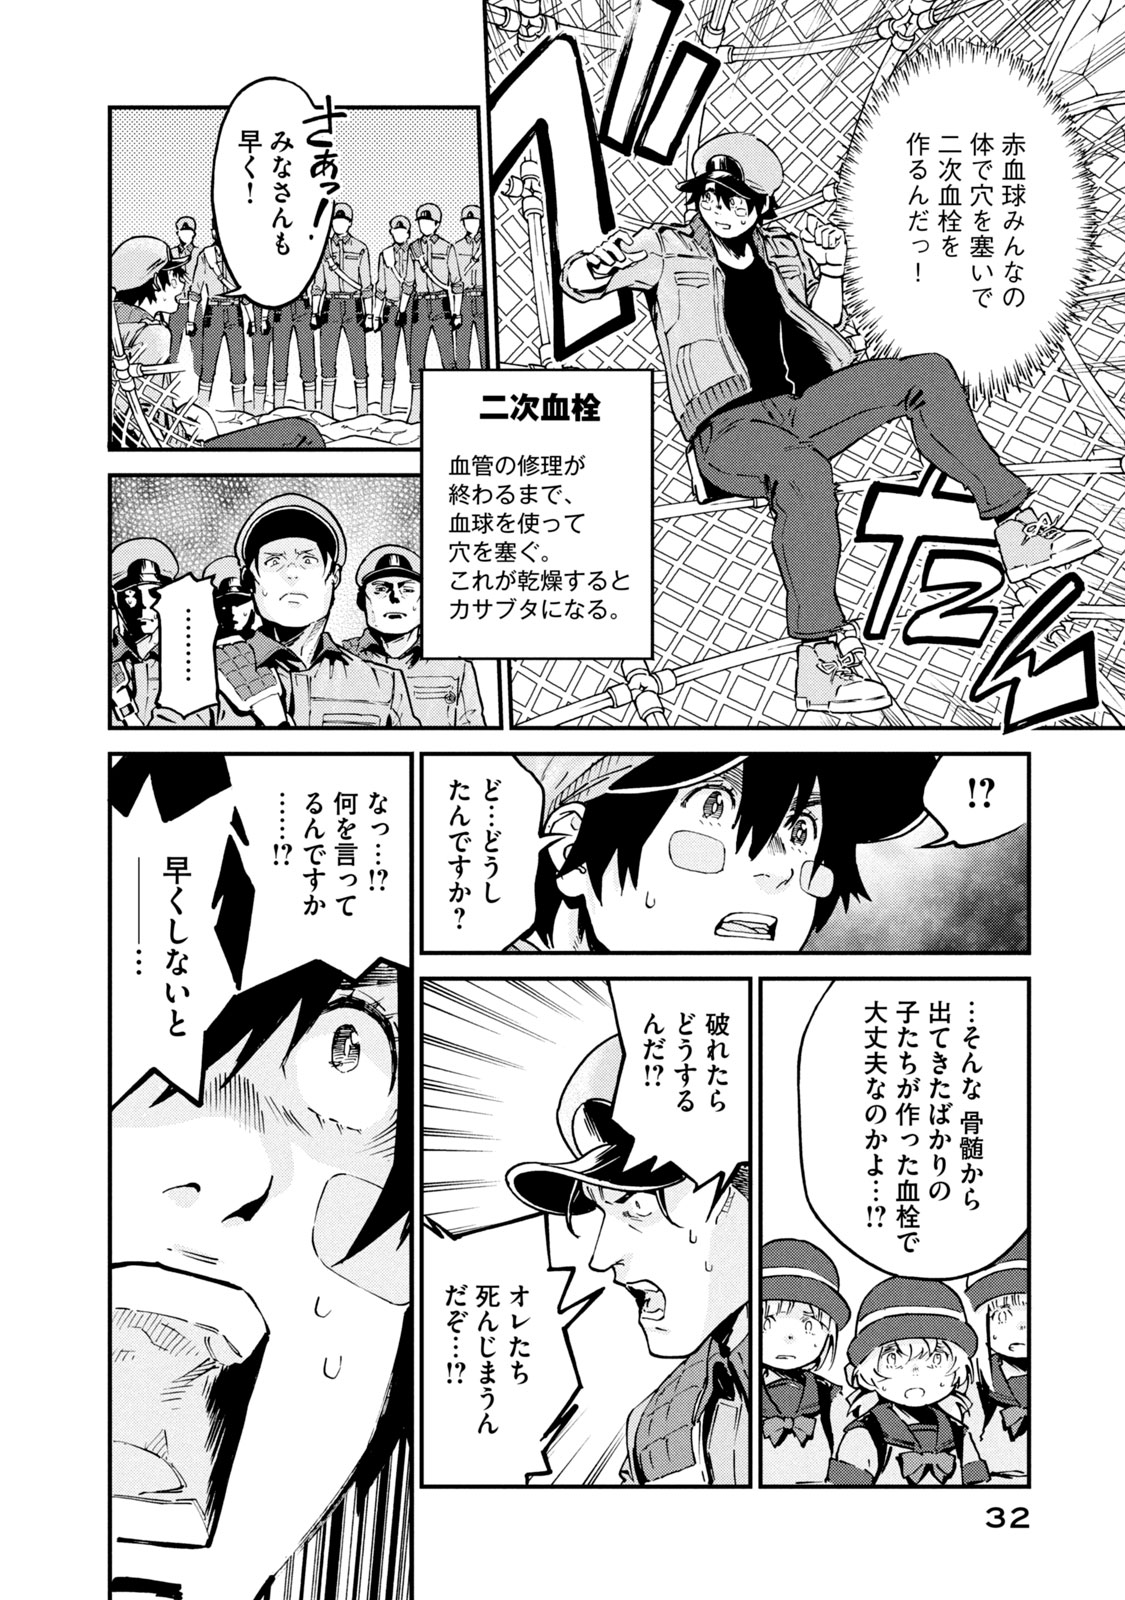 Hataraku Saibou BLACK - Chapter 43 - Page 8